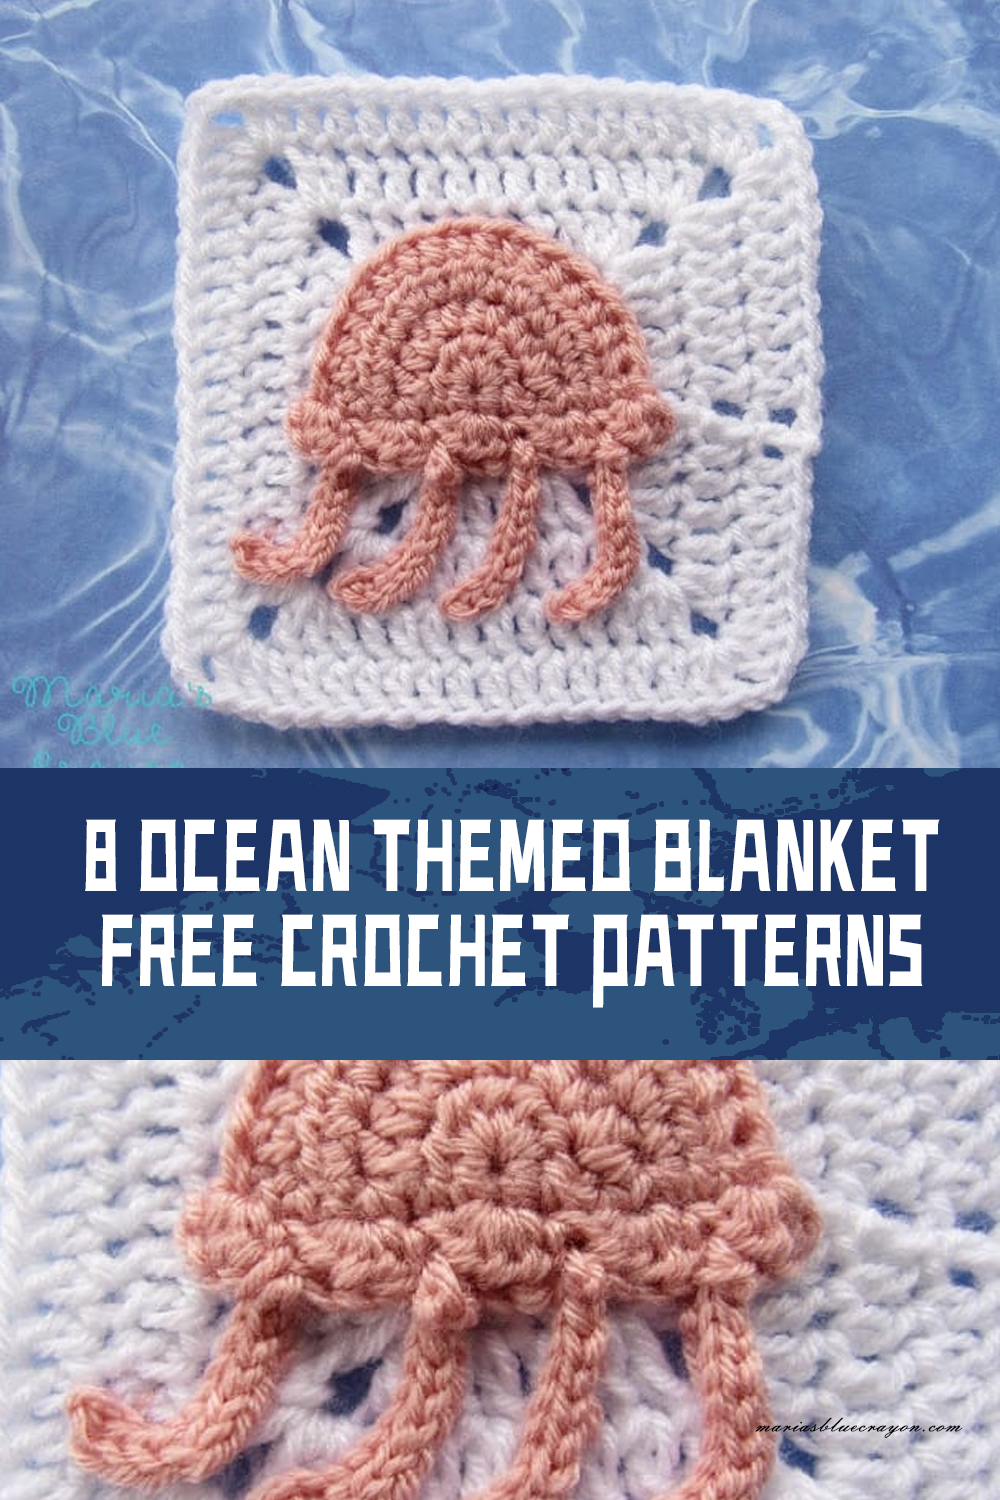 8 Ocean Themed Blanket Free Crochet Patterns